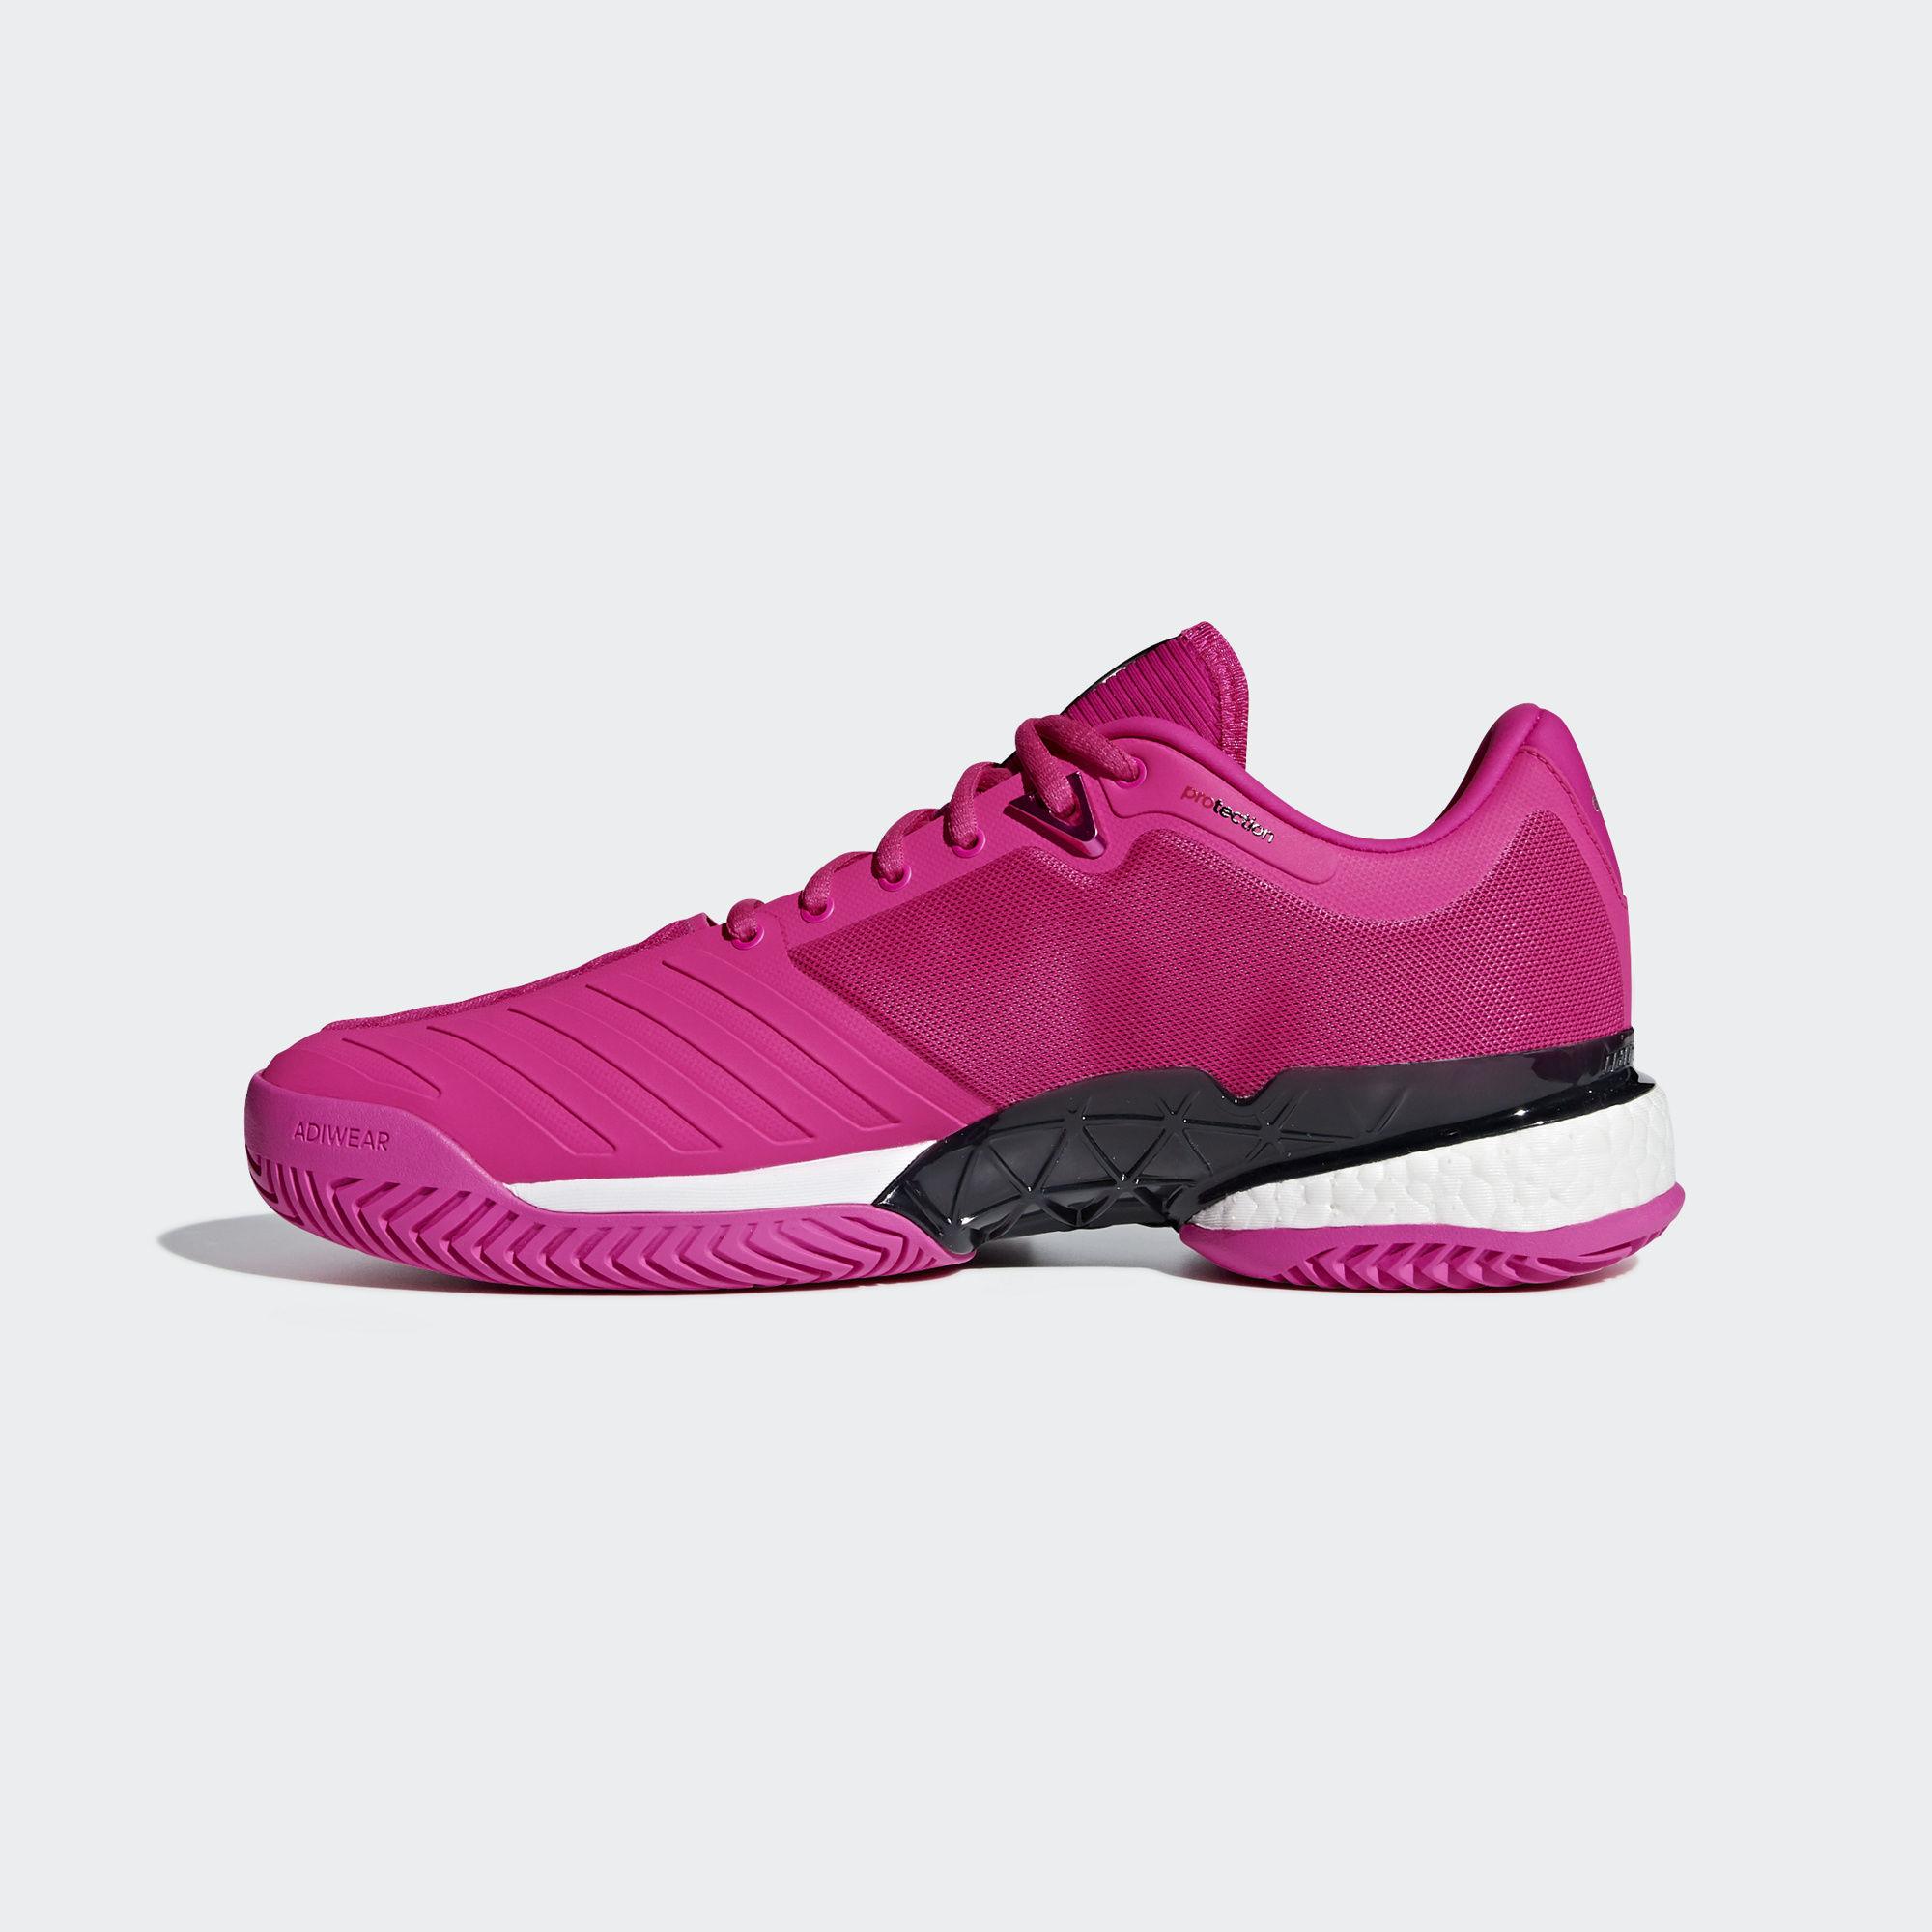 Adidas Mens Barricade Boost 2018 Tennis Shoes - Shock Pink/Legend Ink ...